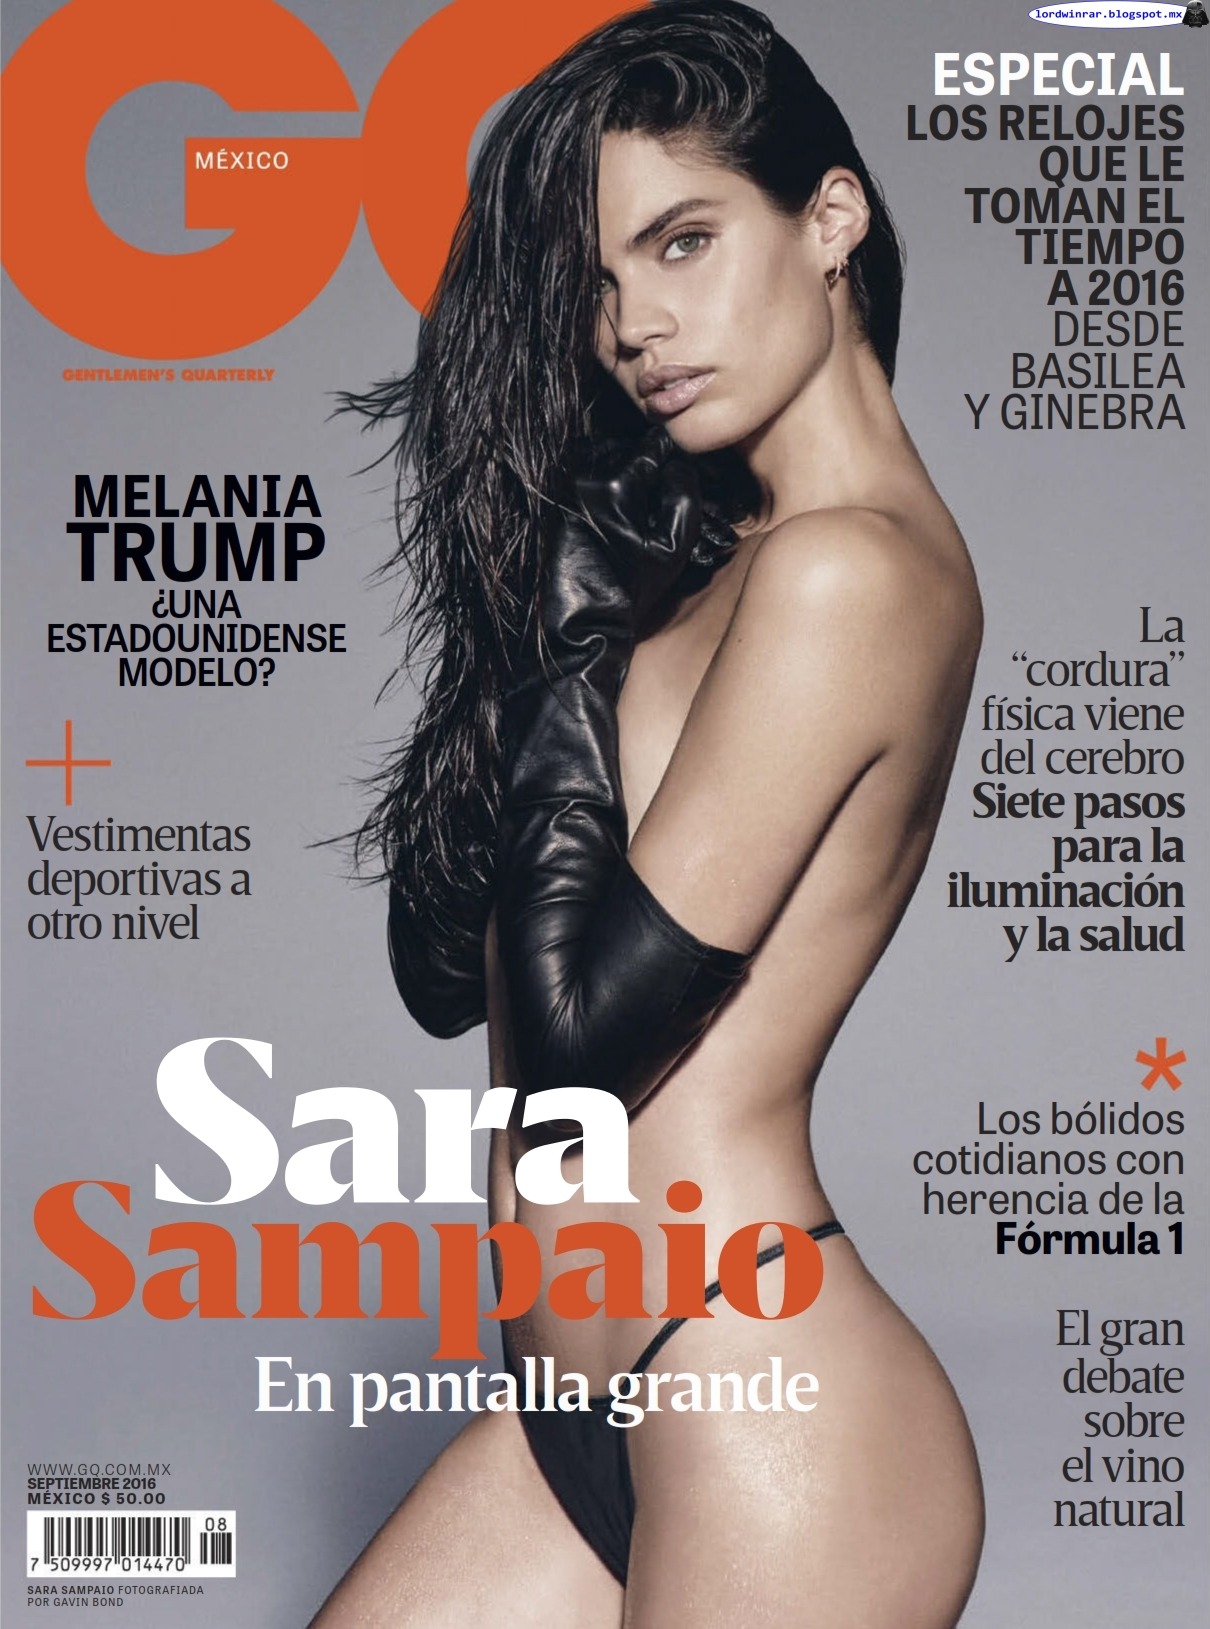   Sara Sampaio - GQ Mexico 2016 Septiembre (13 Fotos HQ)Sara Sampaio semi desnuda